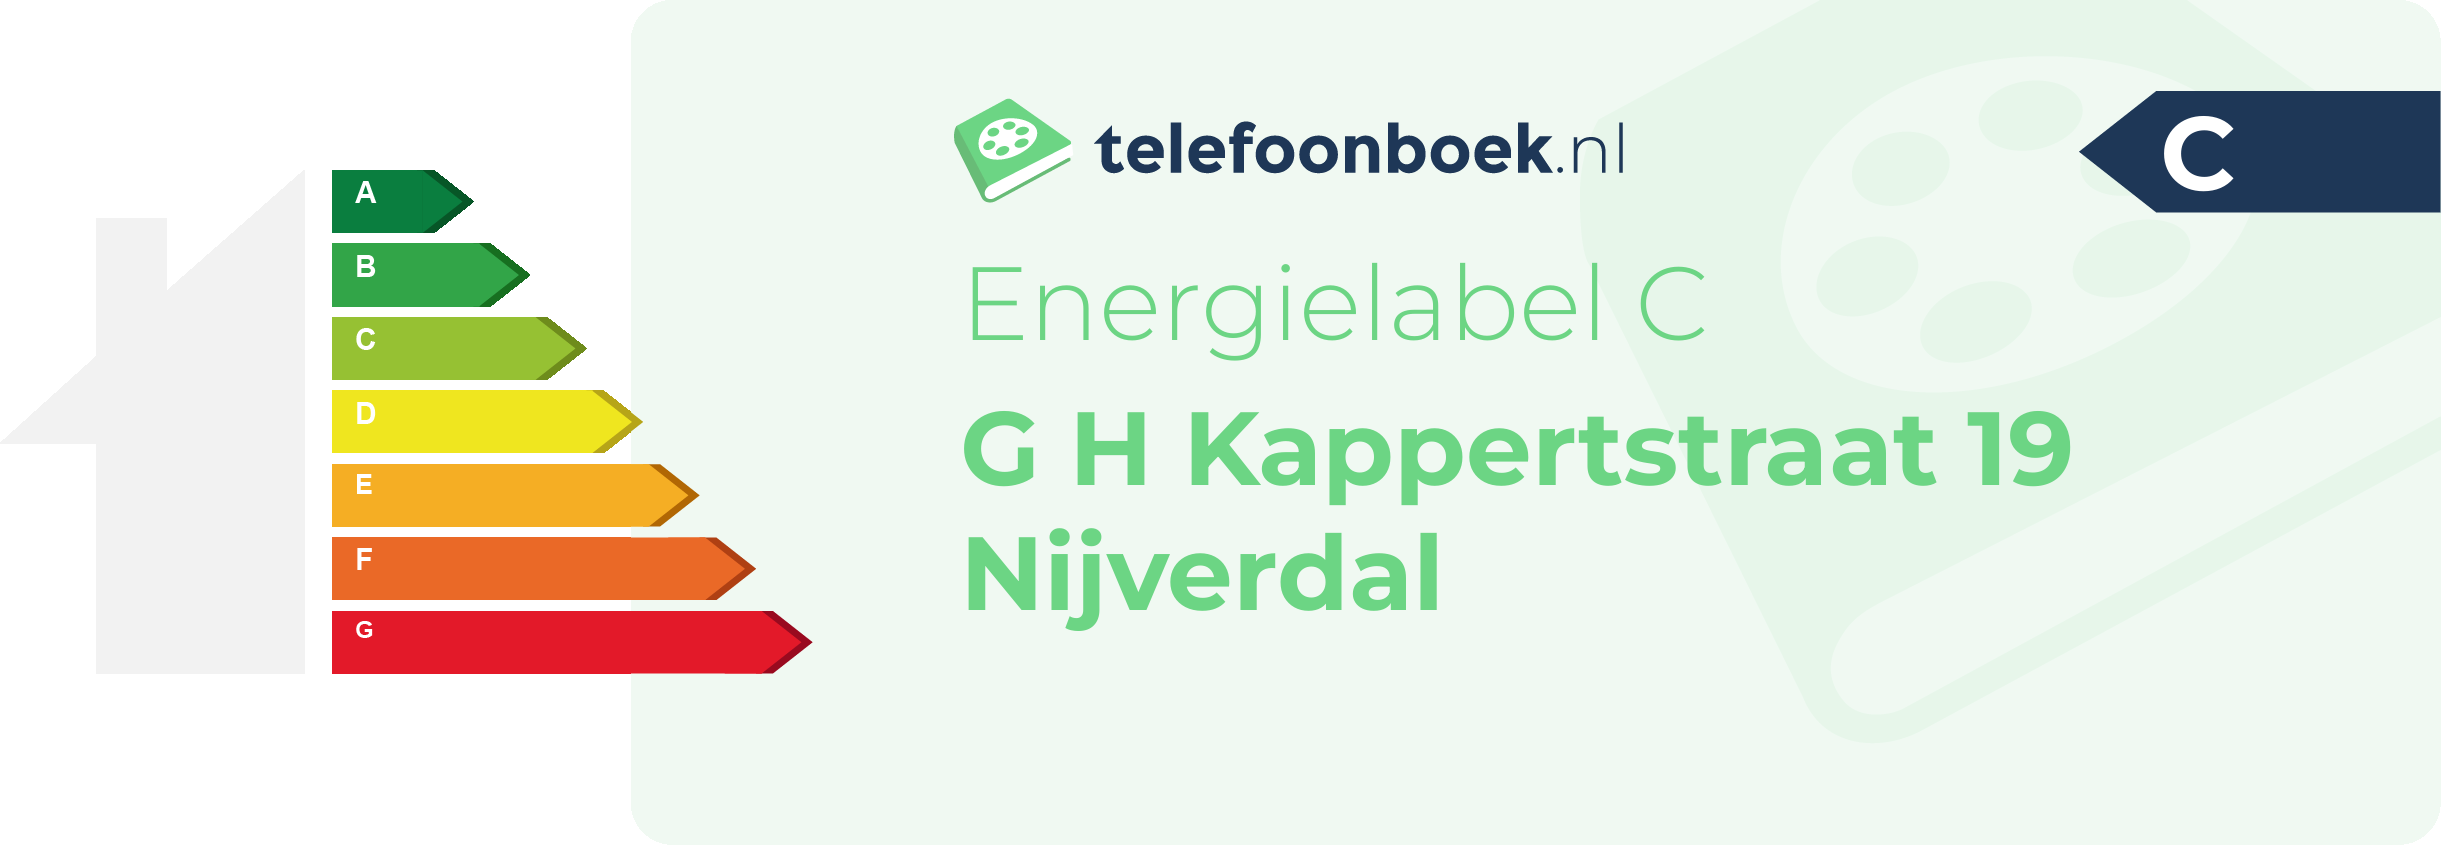 Energielabel G H Kappertstraat 19 Nijverdal